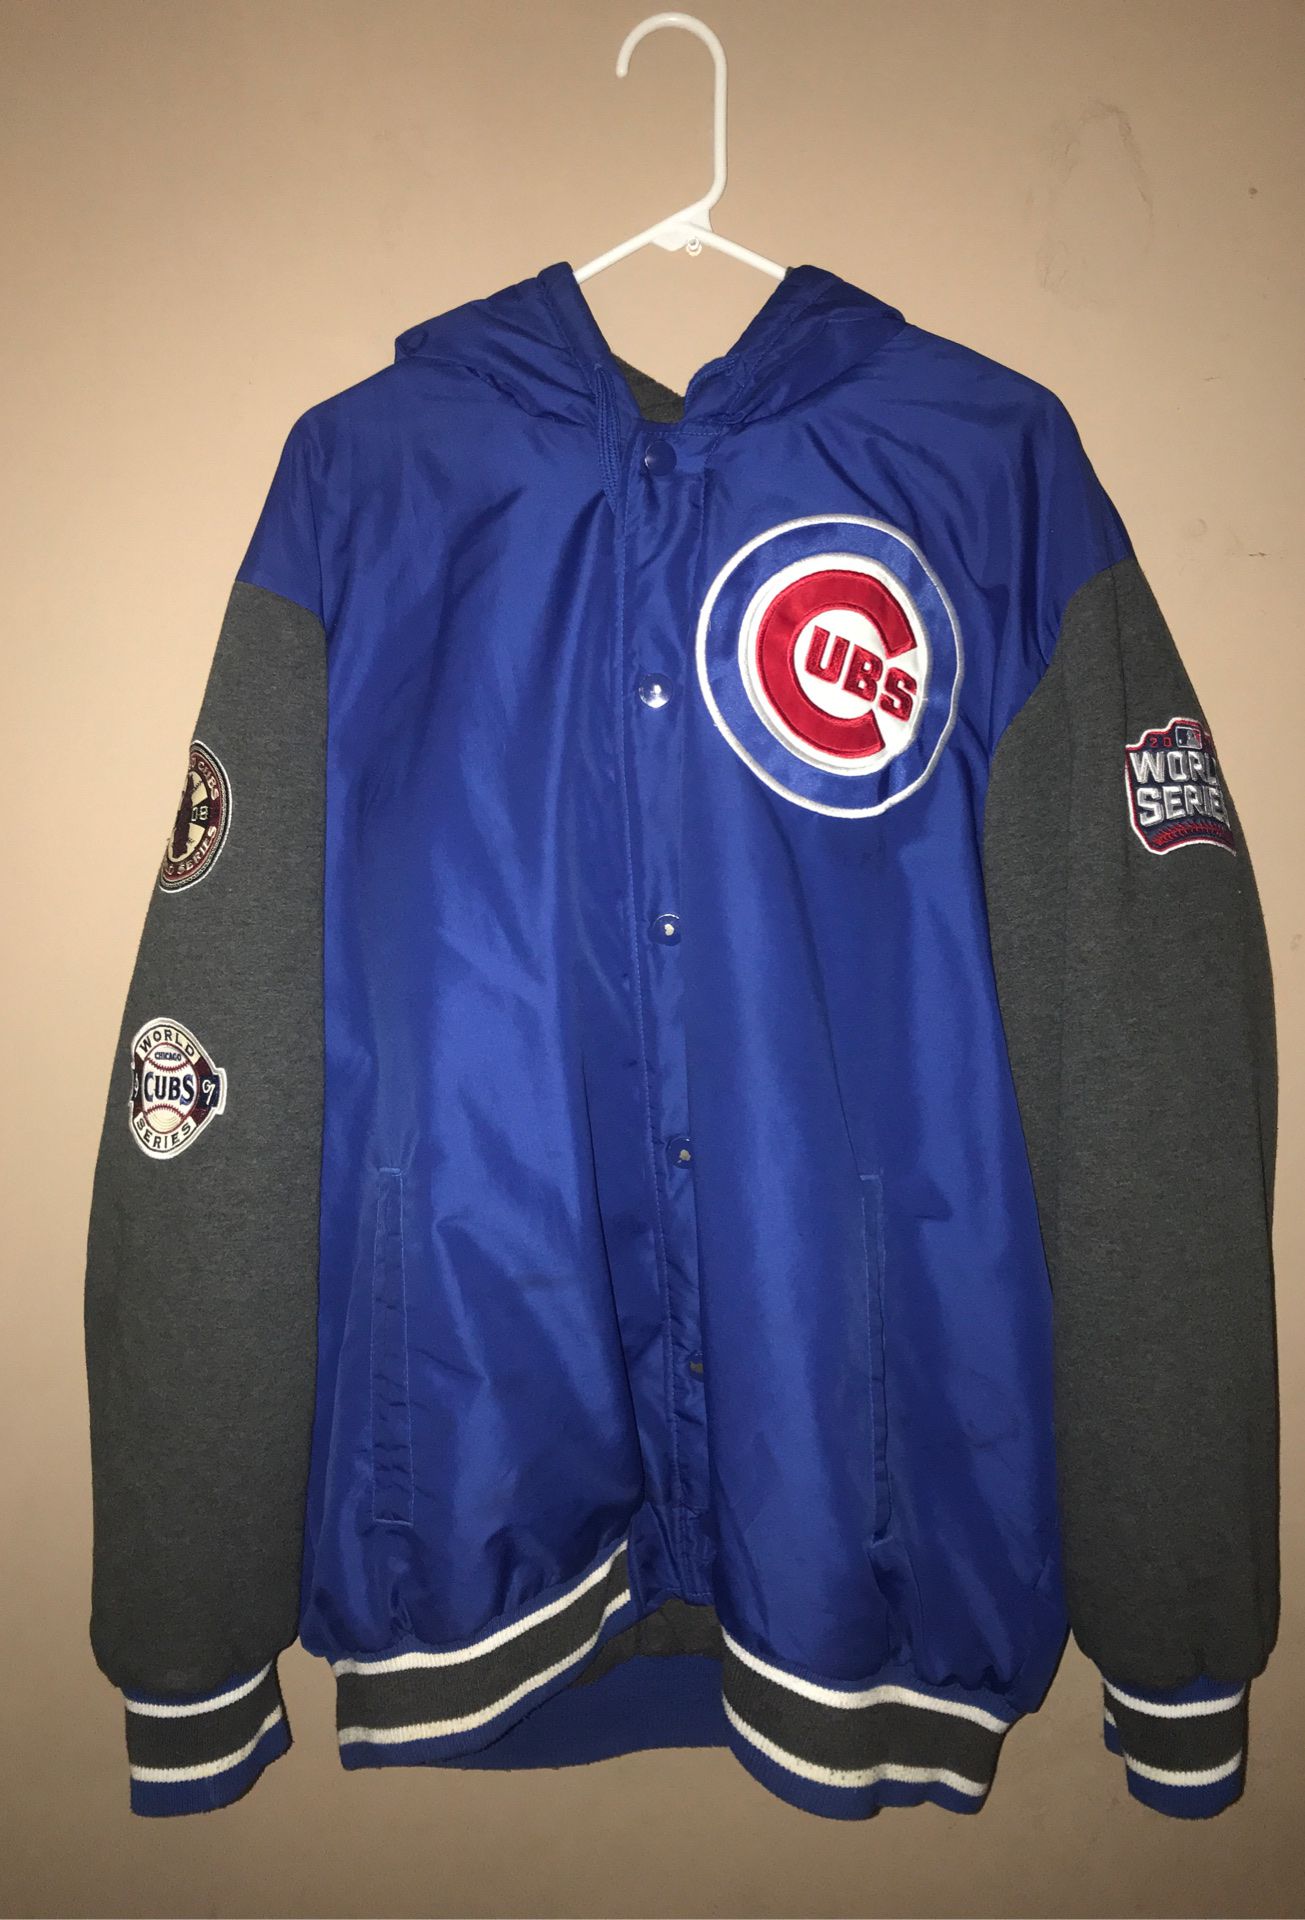 Cubs championship jacket